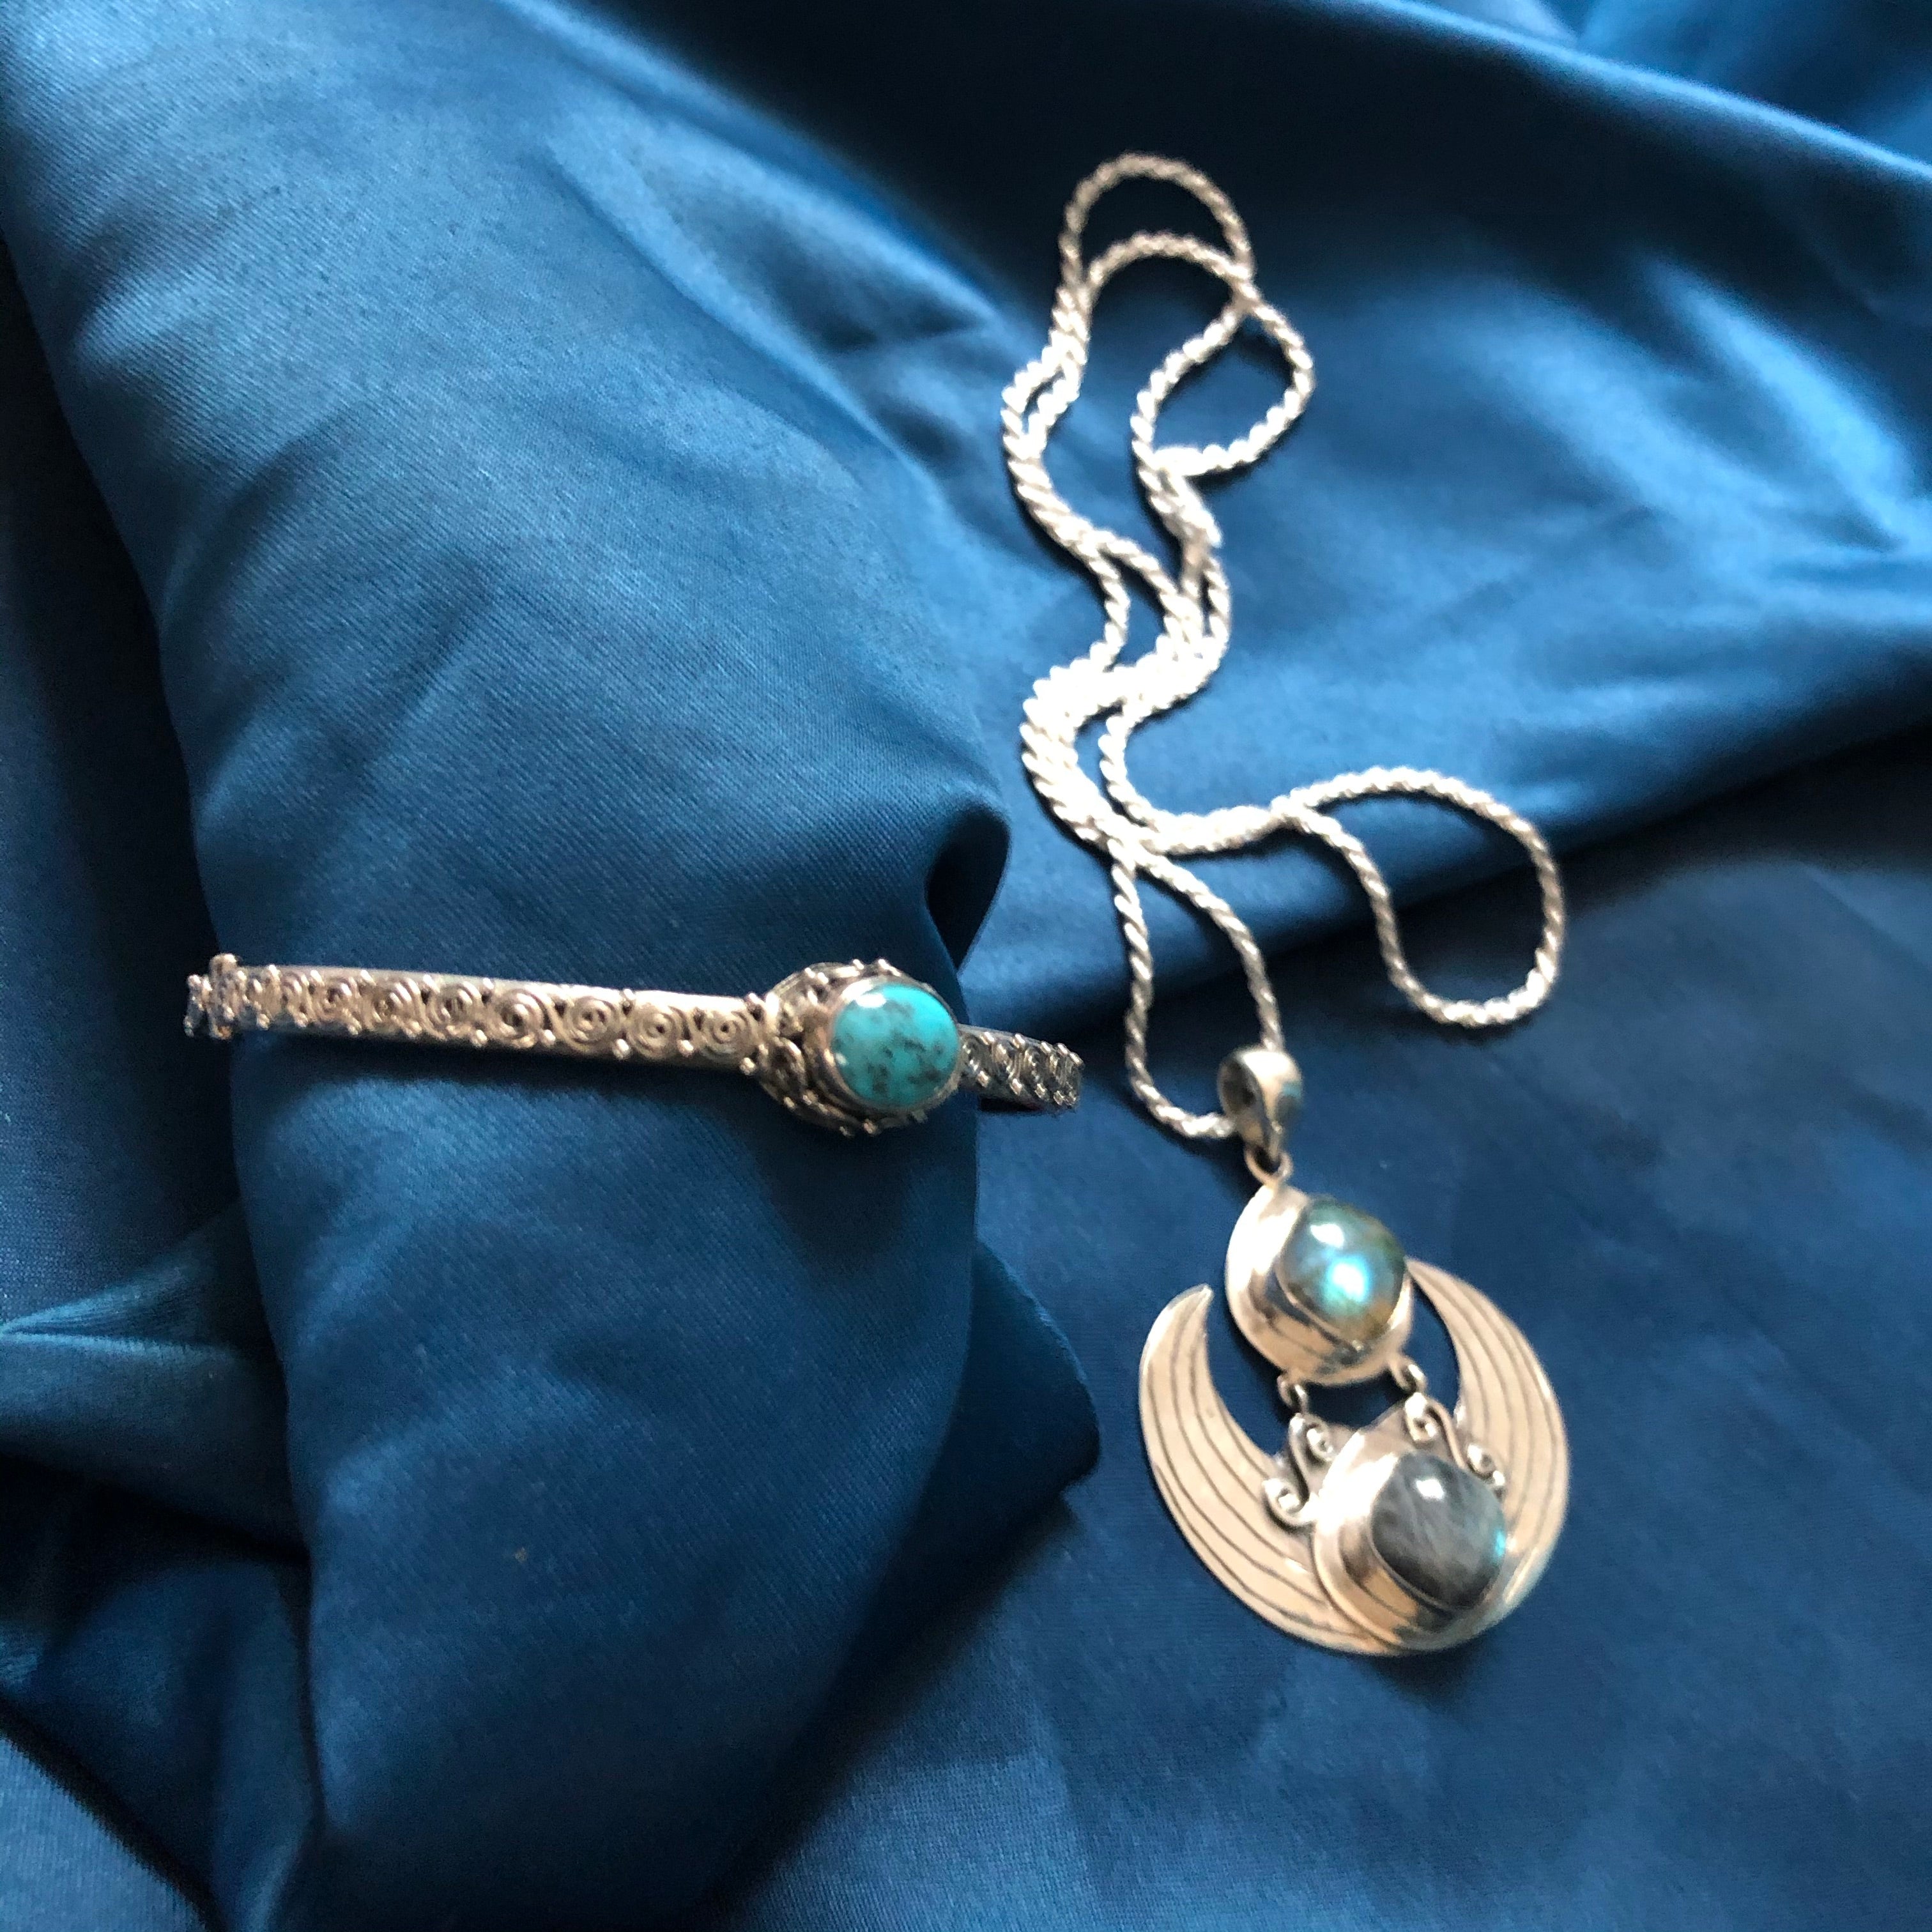 Luna Atlantica Set -  Bracelet and Necklace with Silver Chain